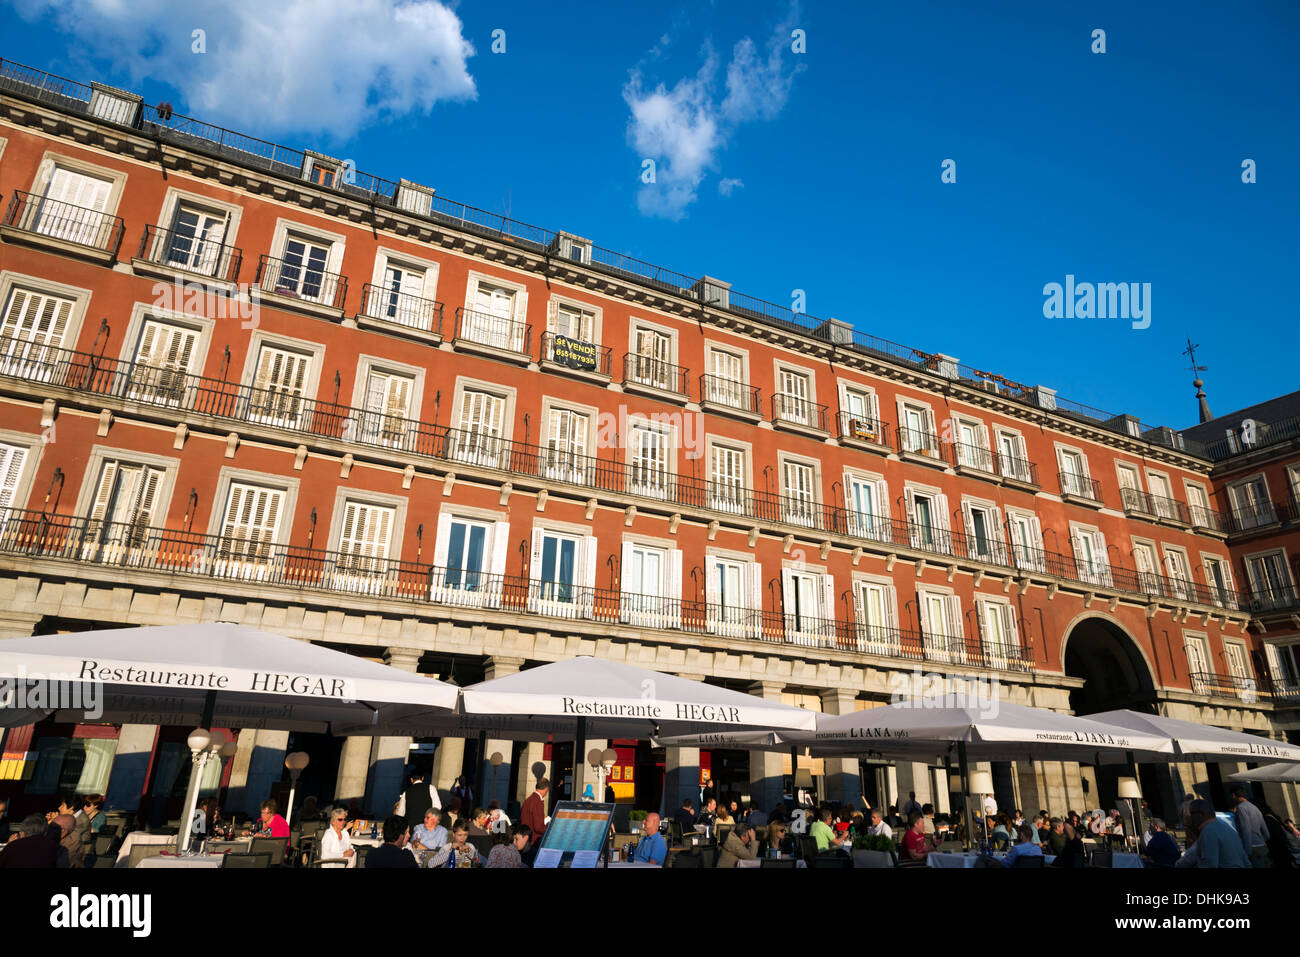 Restaurants in der Plaza Mayor, Madrid, Spanien Stockfoto